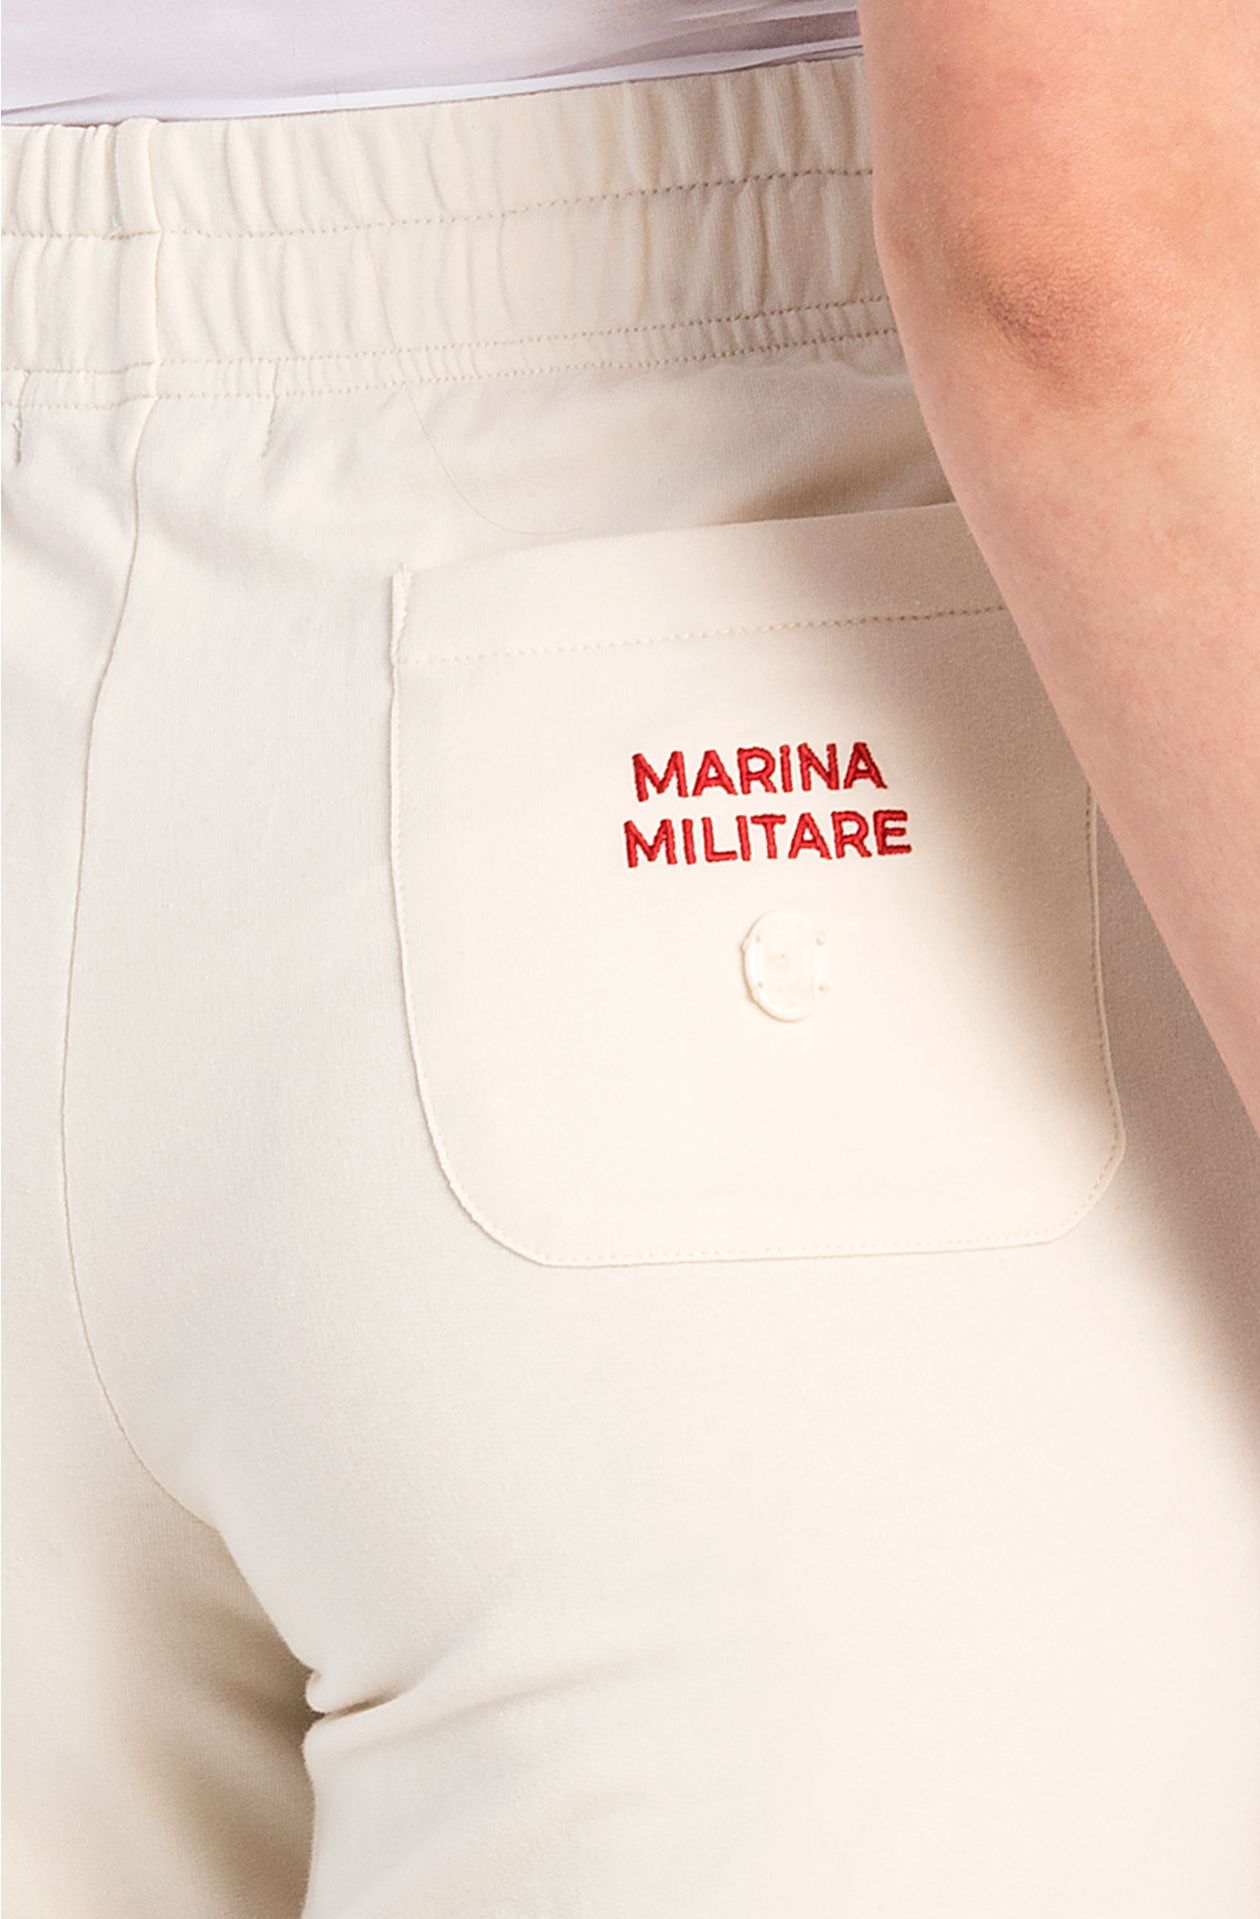 Naval Academy Pants